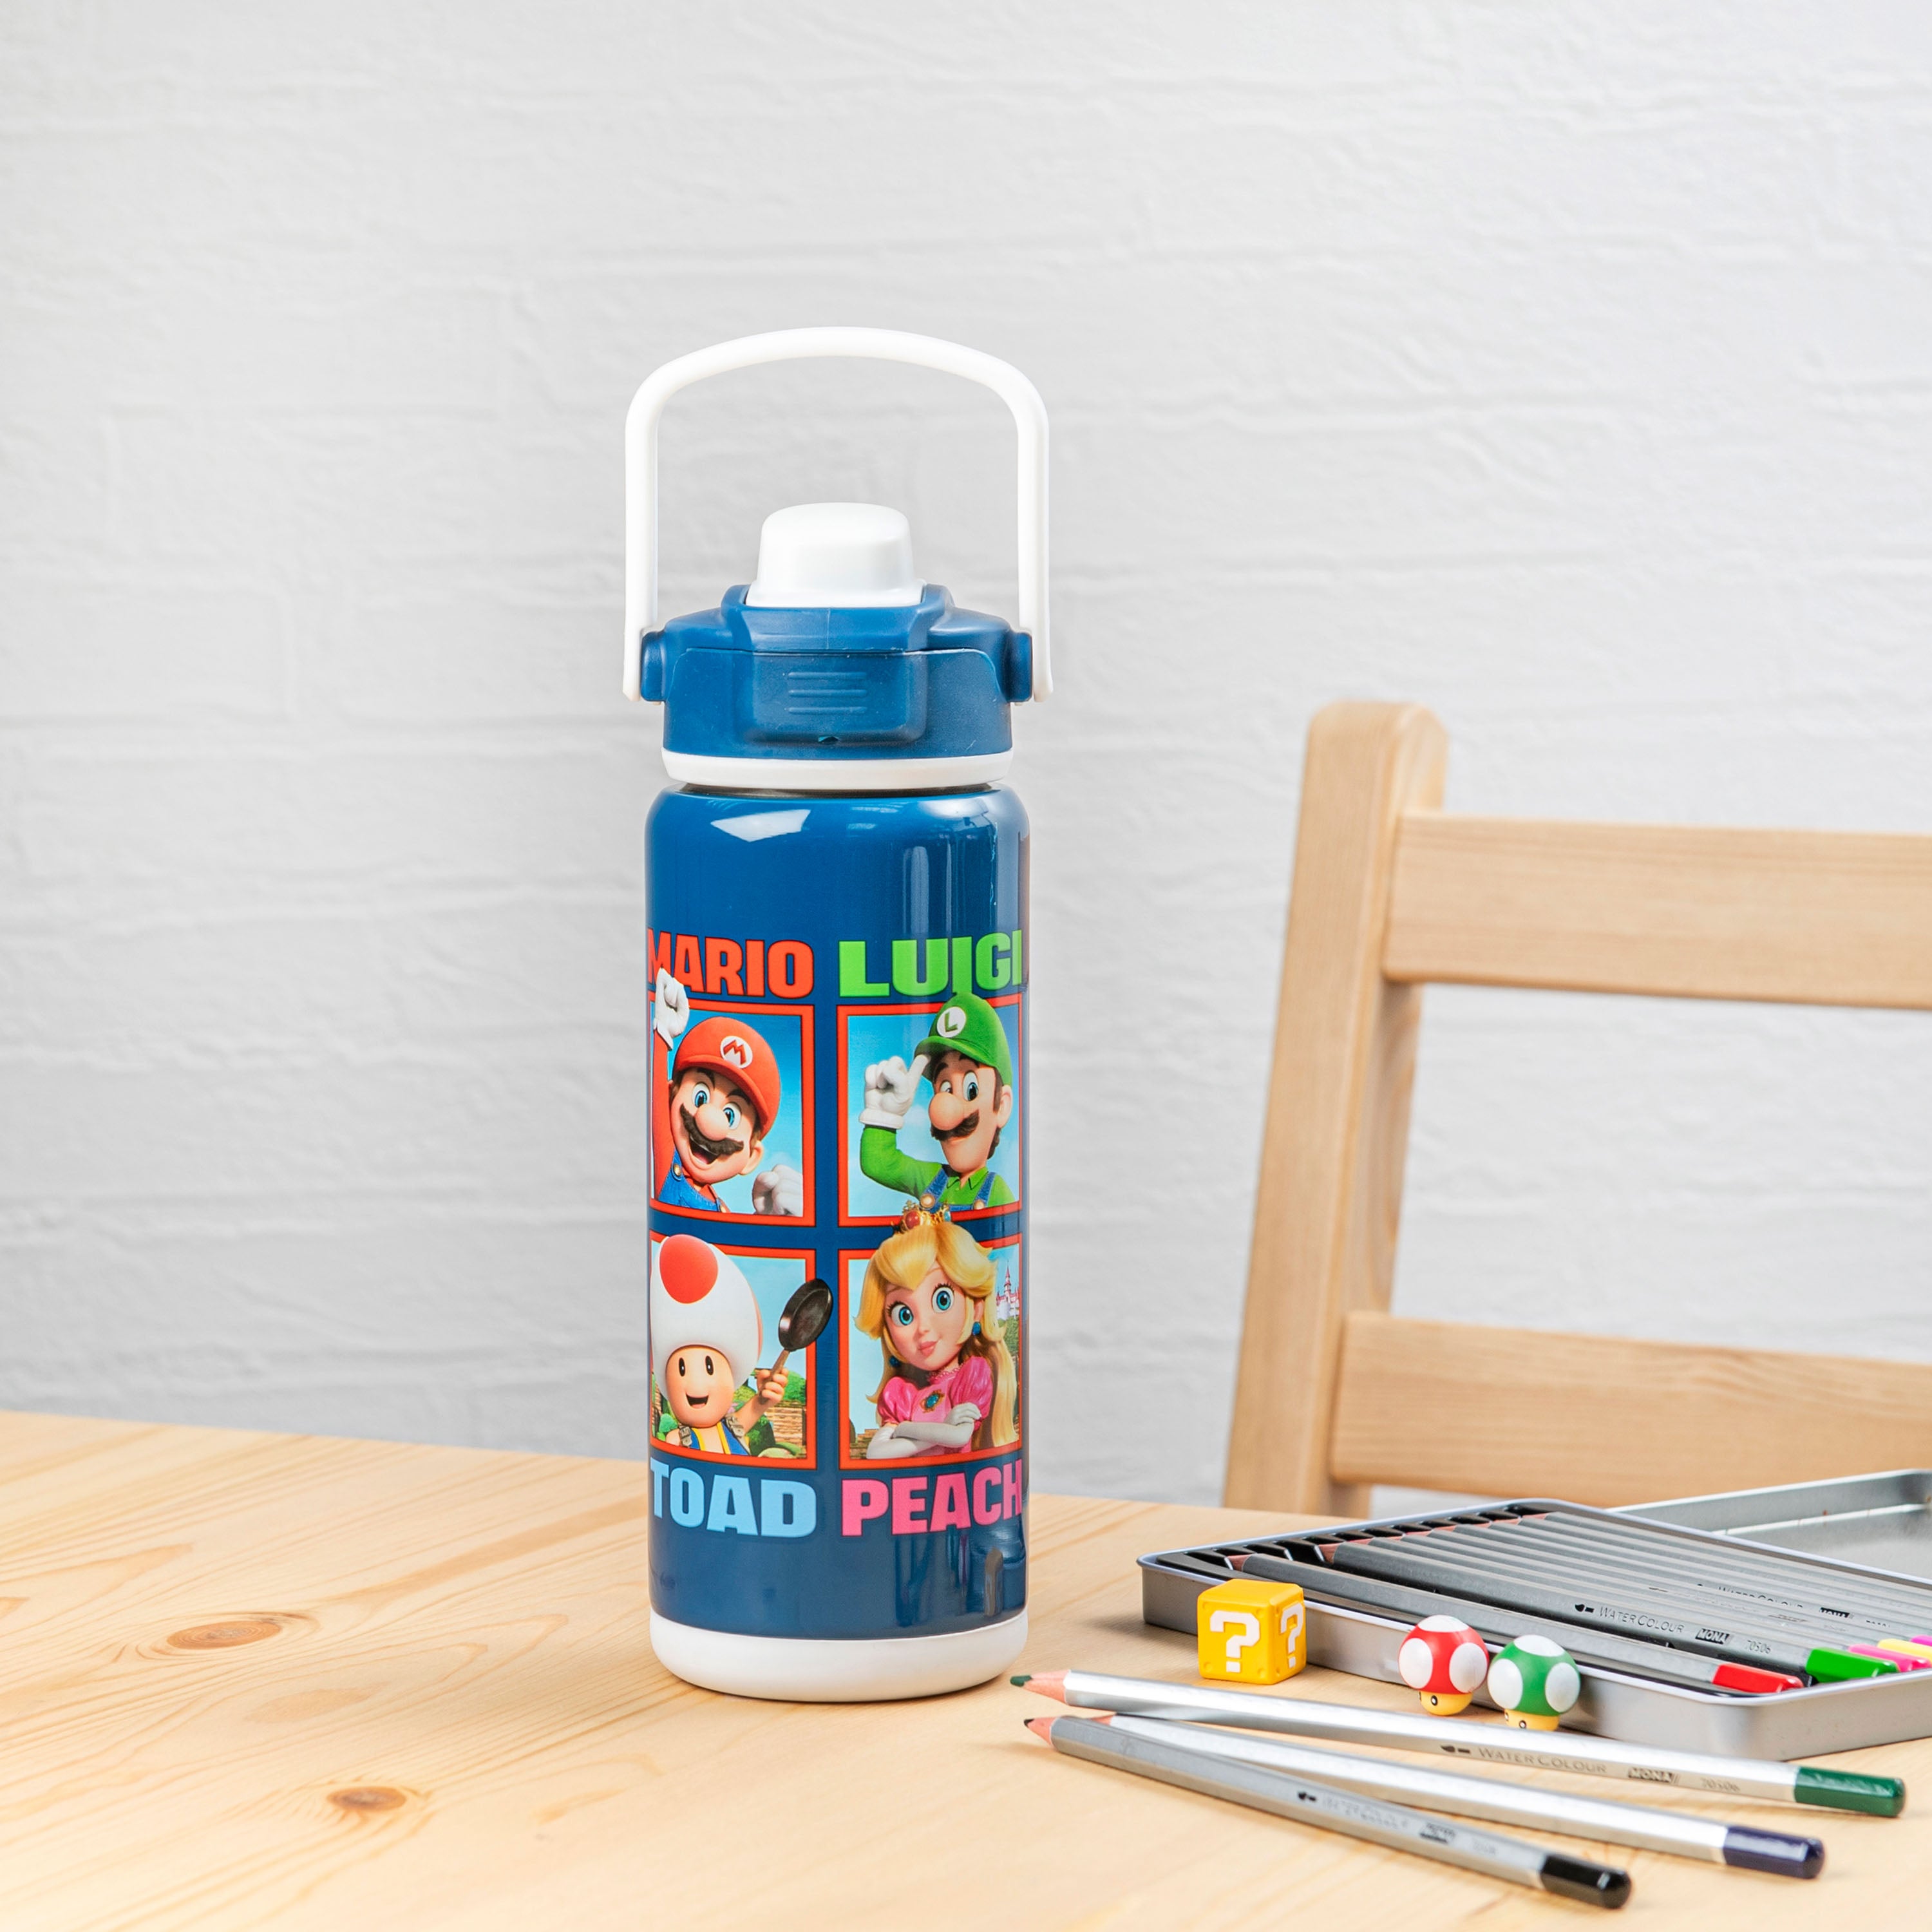 Super Mario Bros Water Bottle Anime Portable Leak-proof Drink